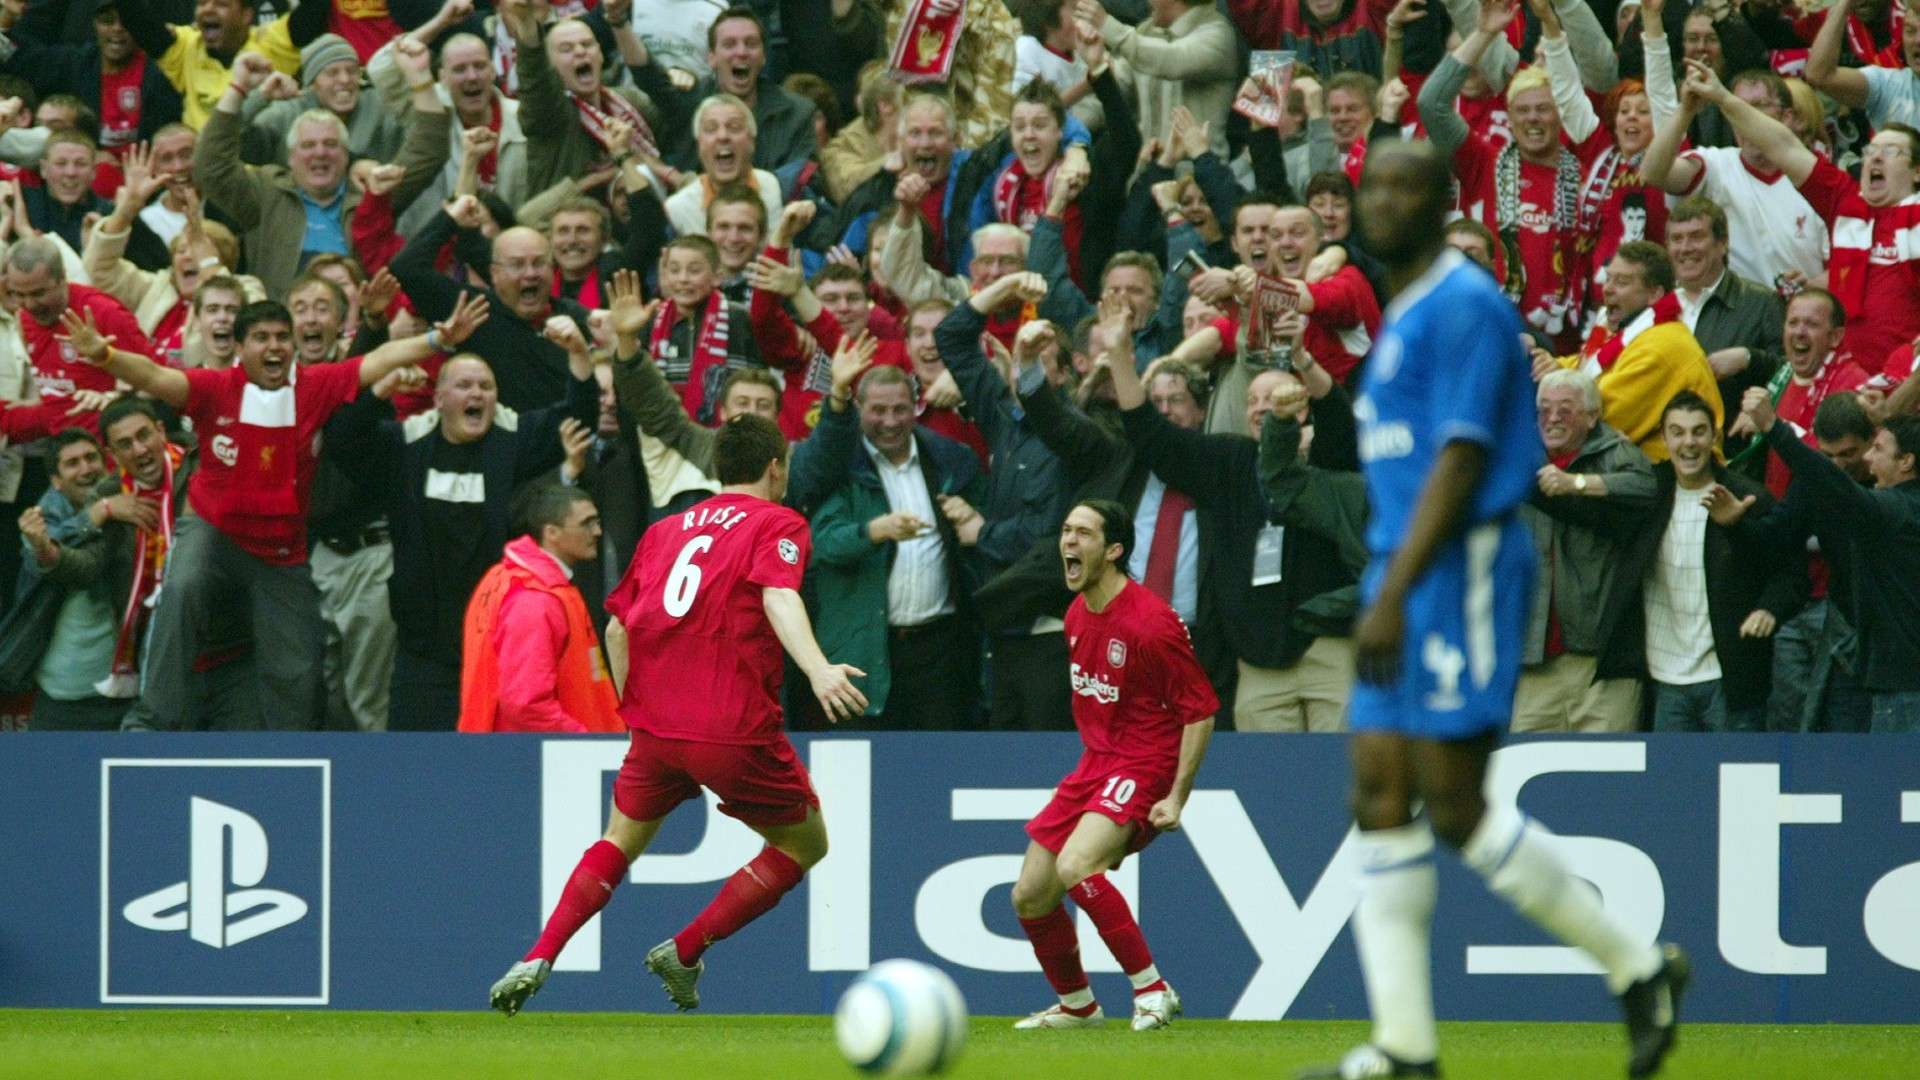 Garcia Liverpool vs Chelsea 2004-05